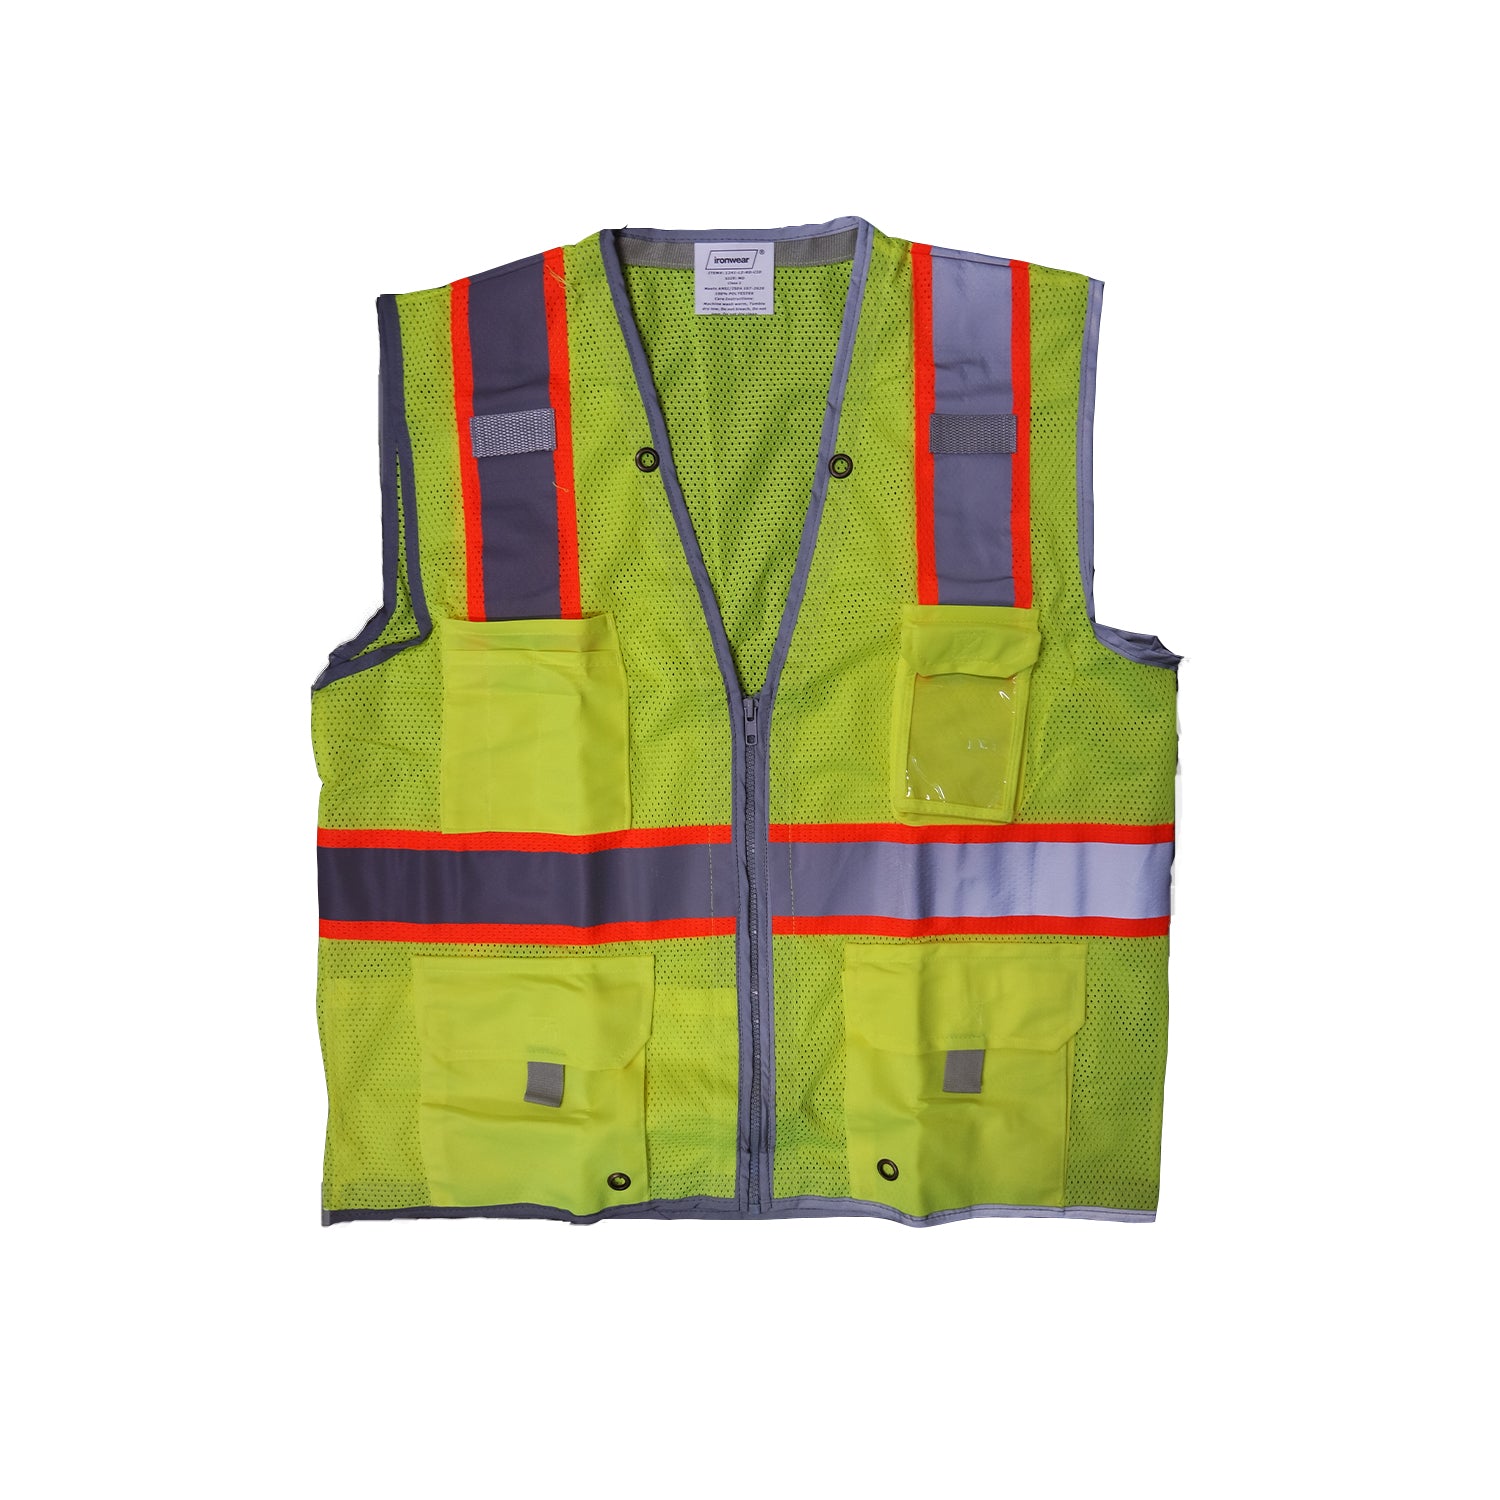 Ironwear Vest Lime 1241, ANSI Class 2, - Lime Mesh, 6 pockets - eGPS ...